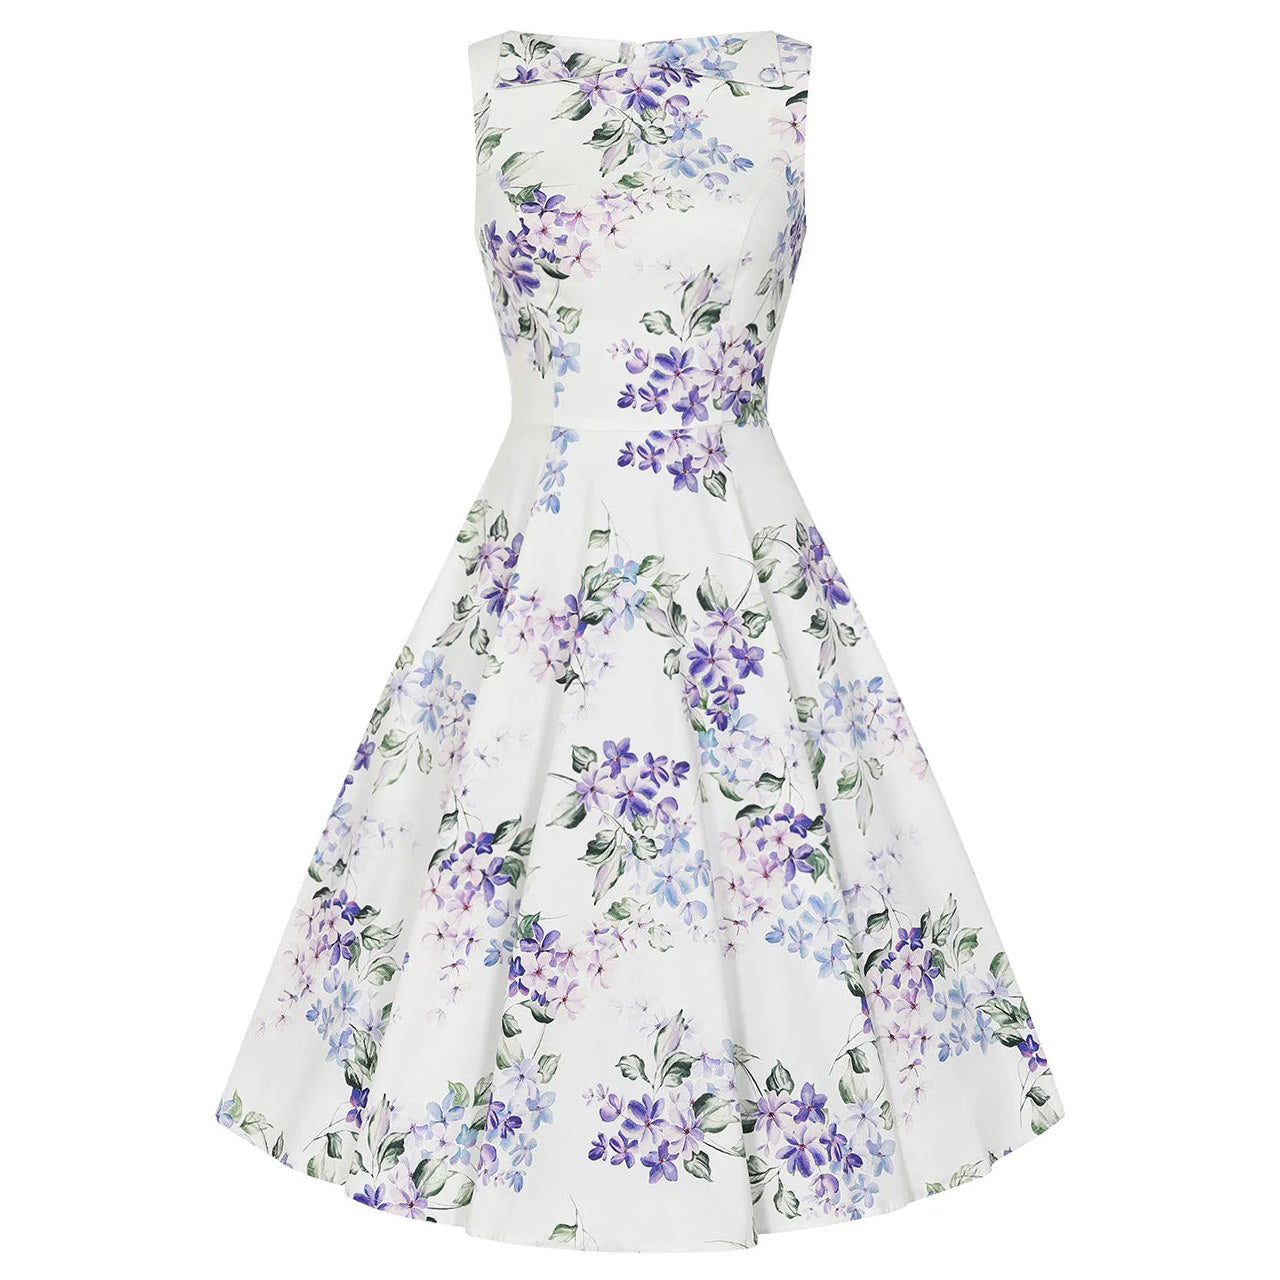 CHARLIE Floral Applique Dress (Pre-order)– Out With Audrey